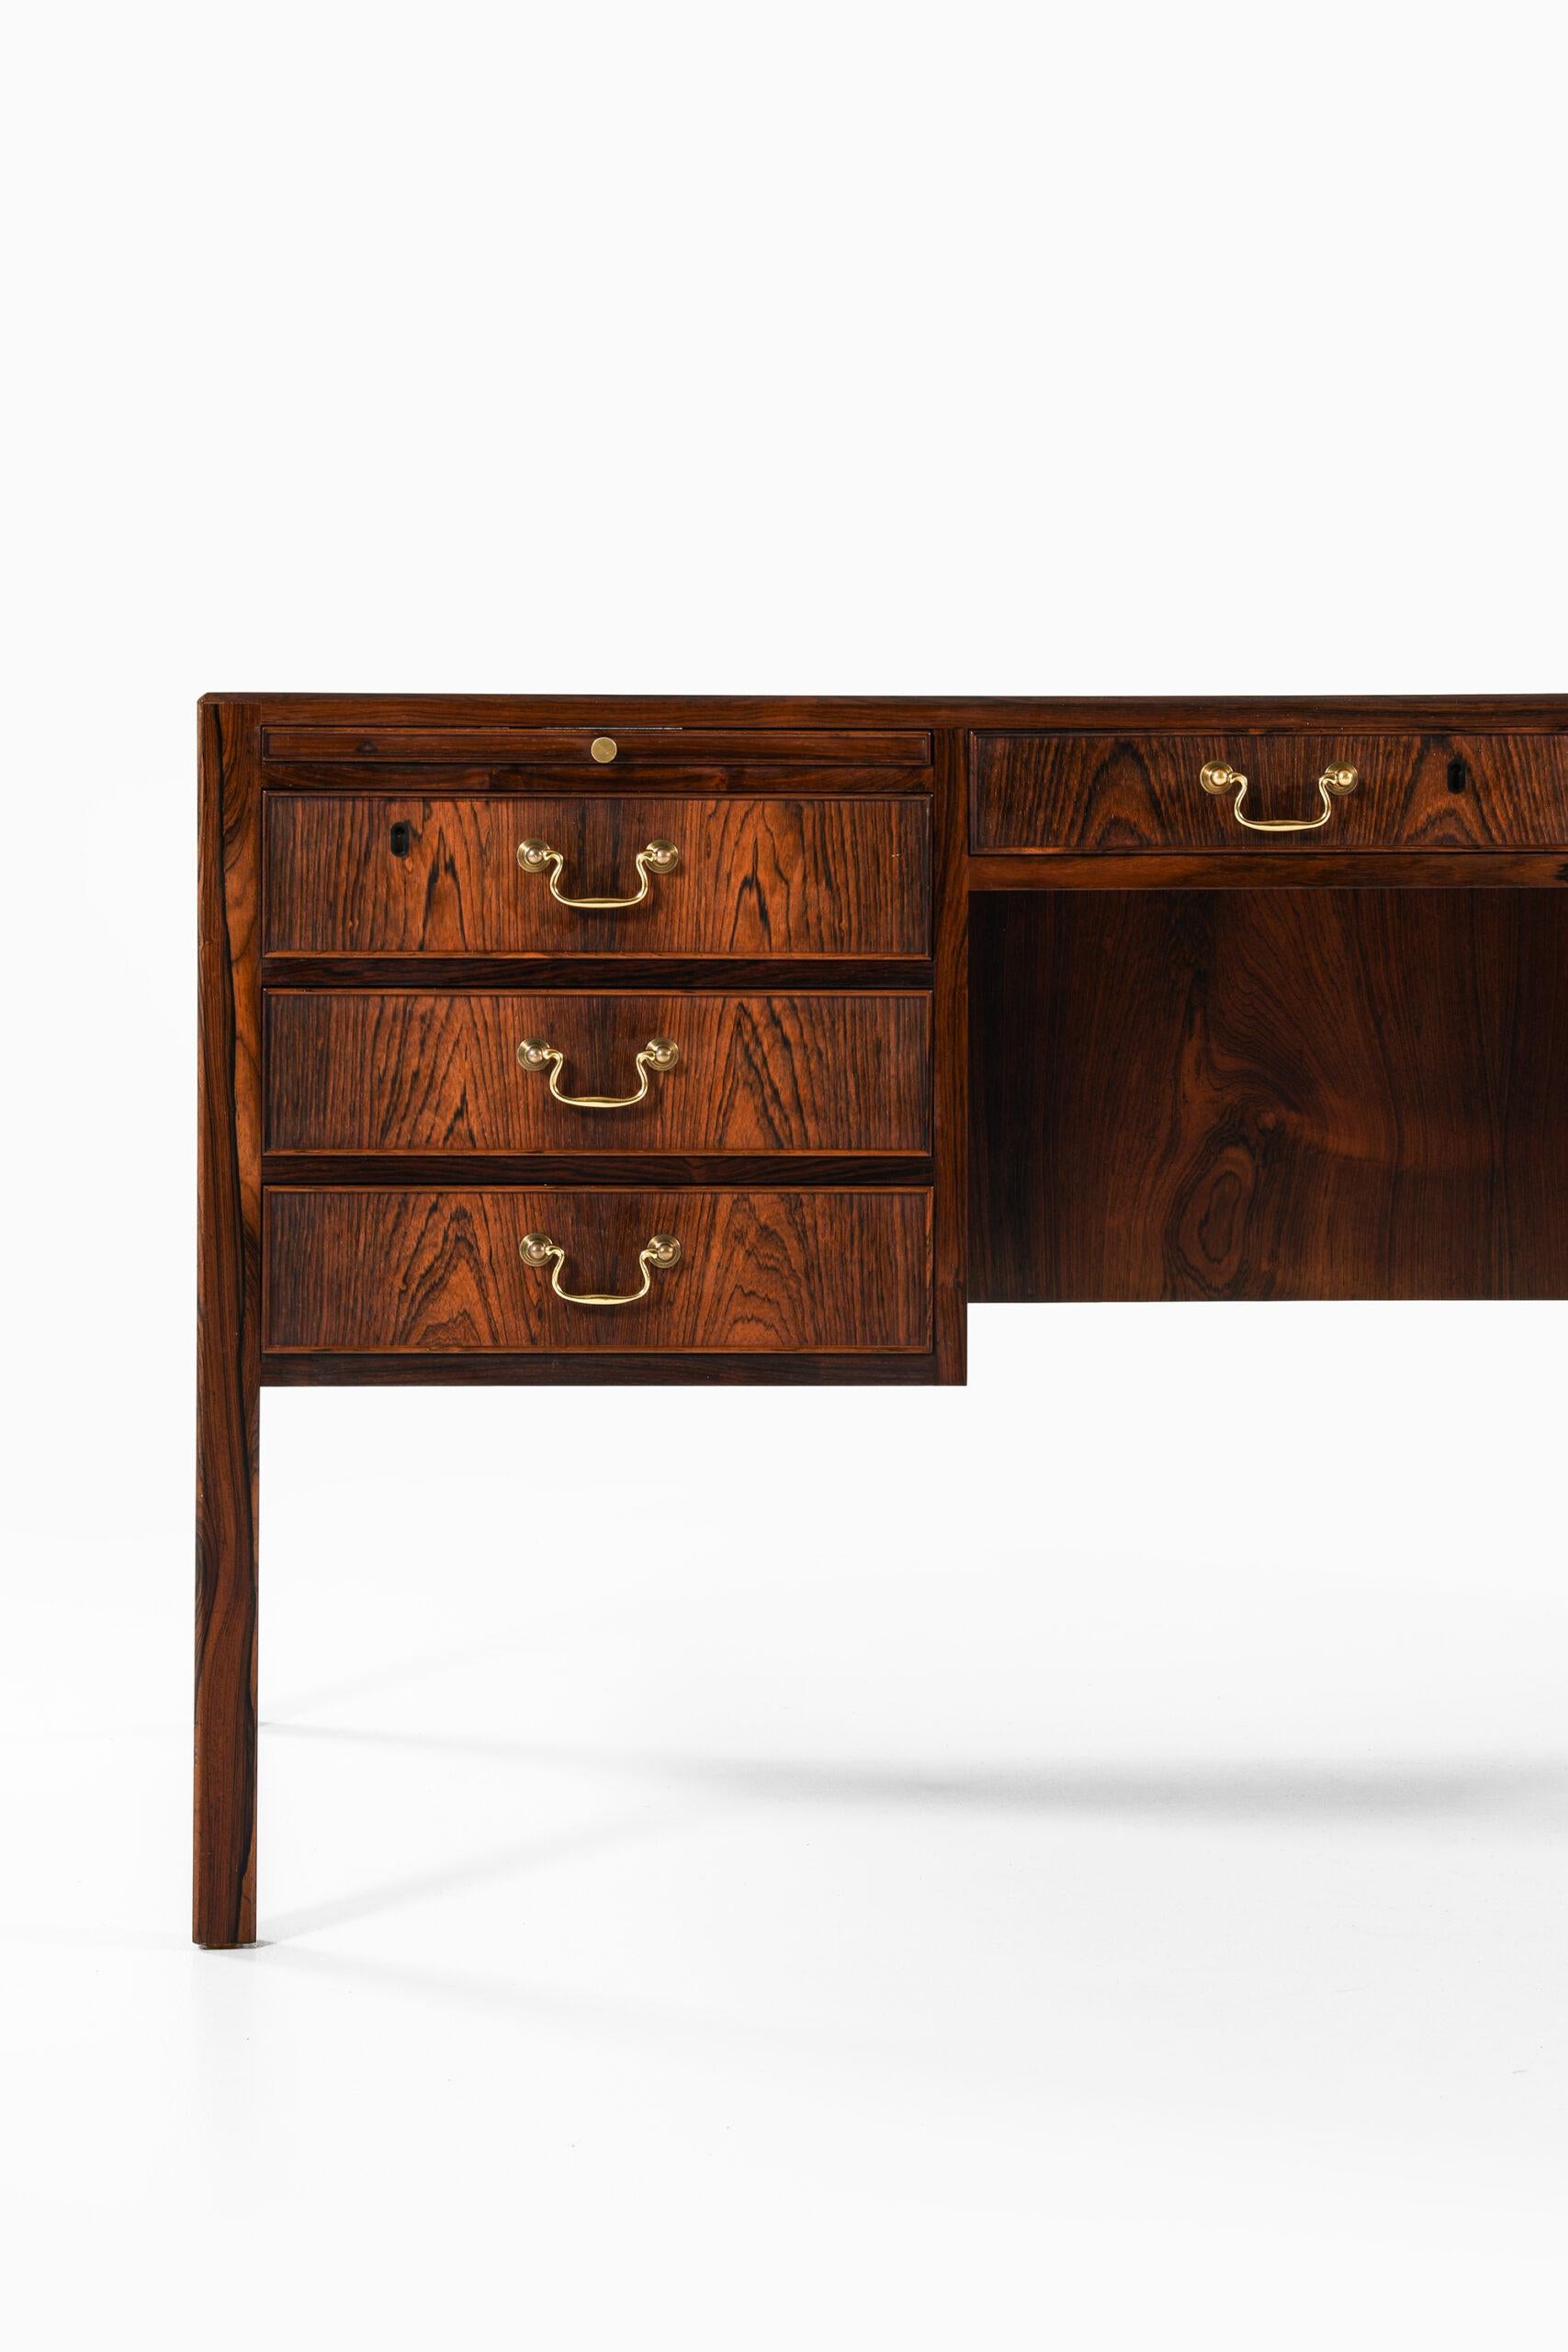 Rare freestanding desk designed by Ole Wanscher. Produced by cabinetmaker A.J. Iversen in Denmark.
 